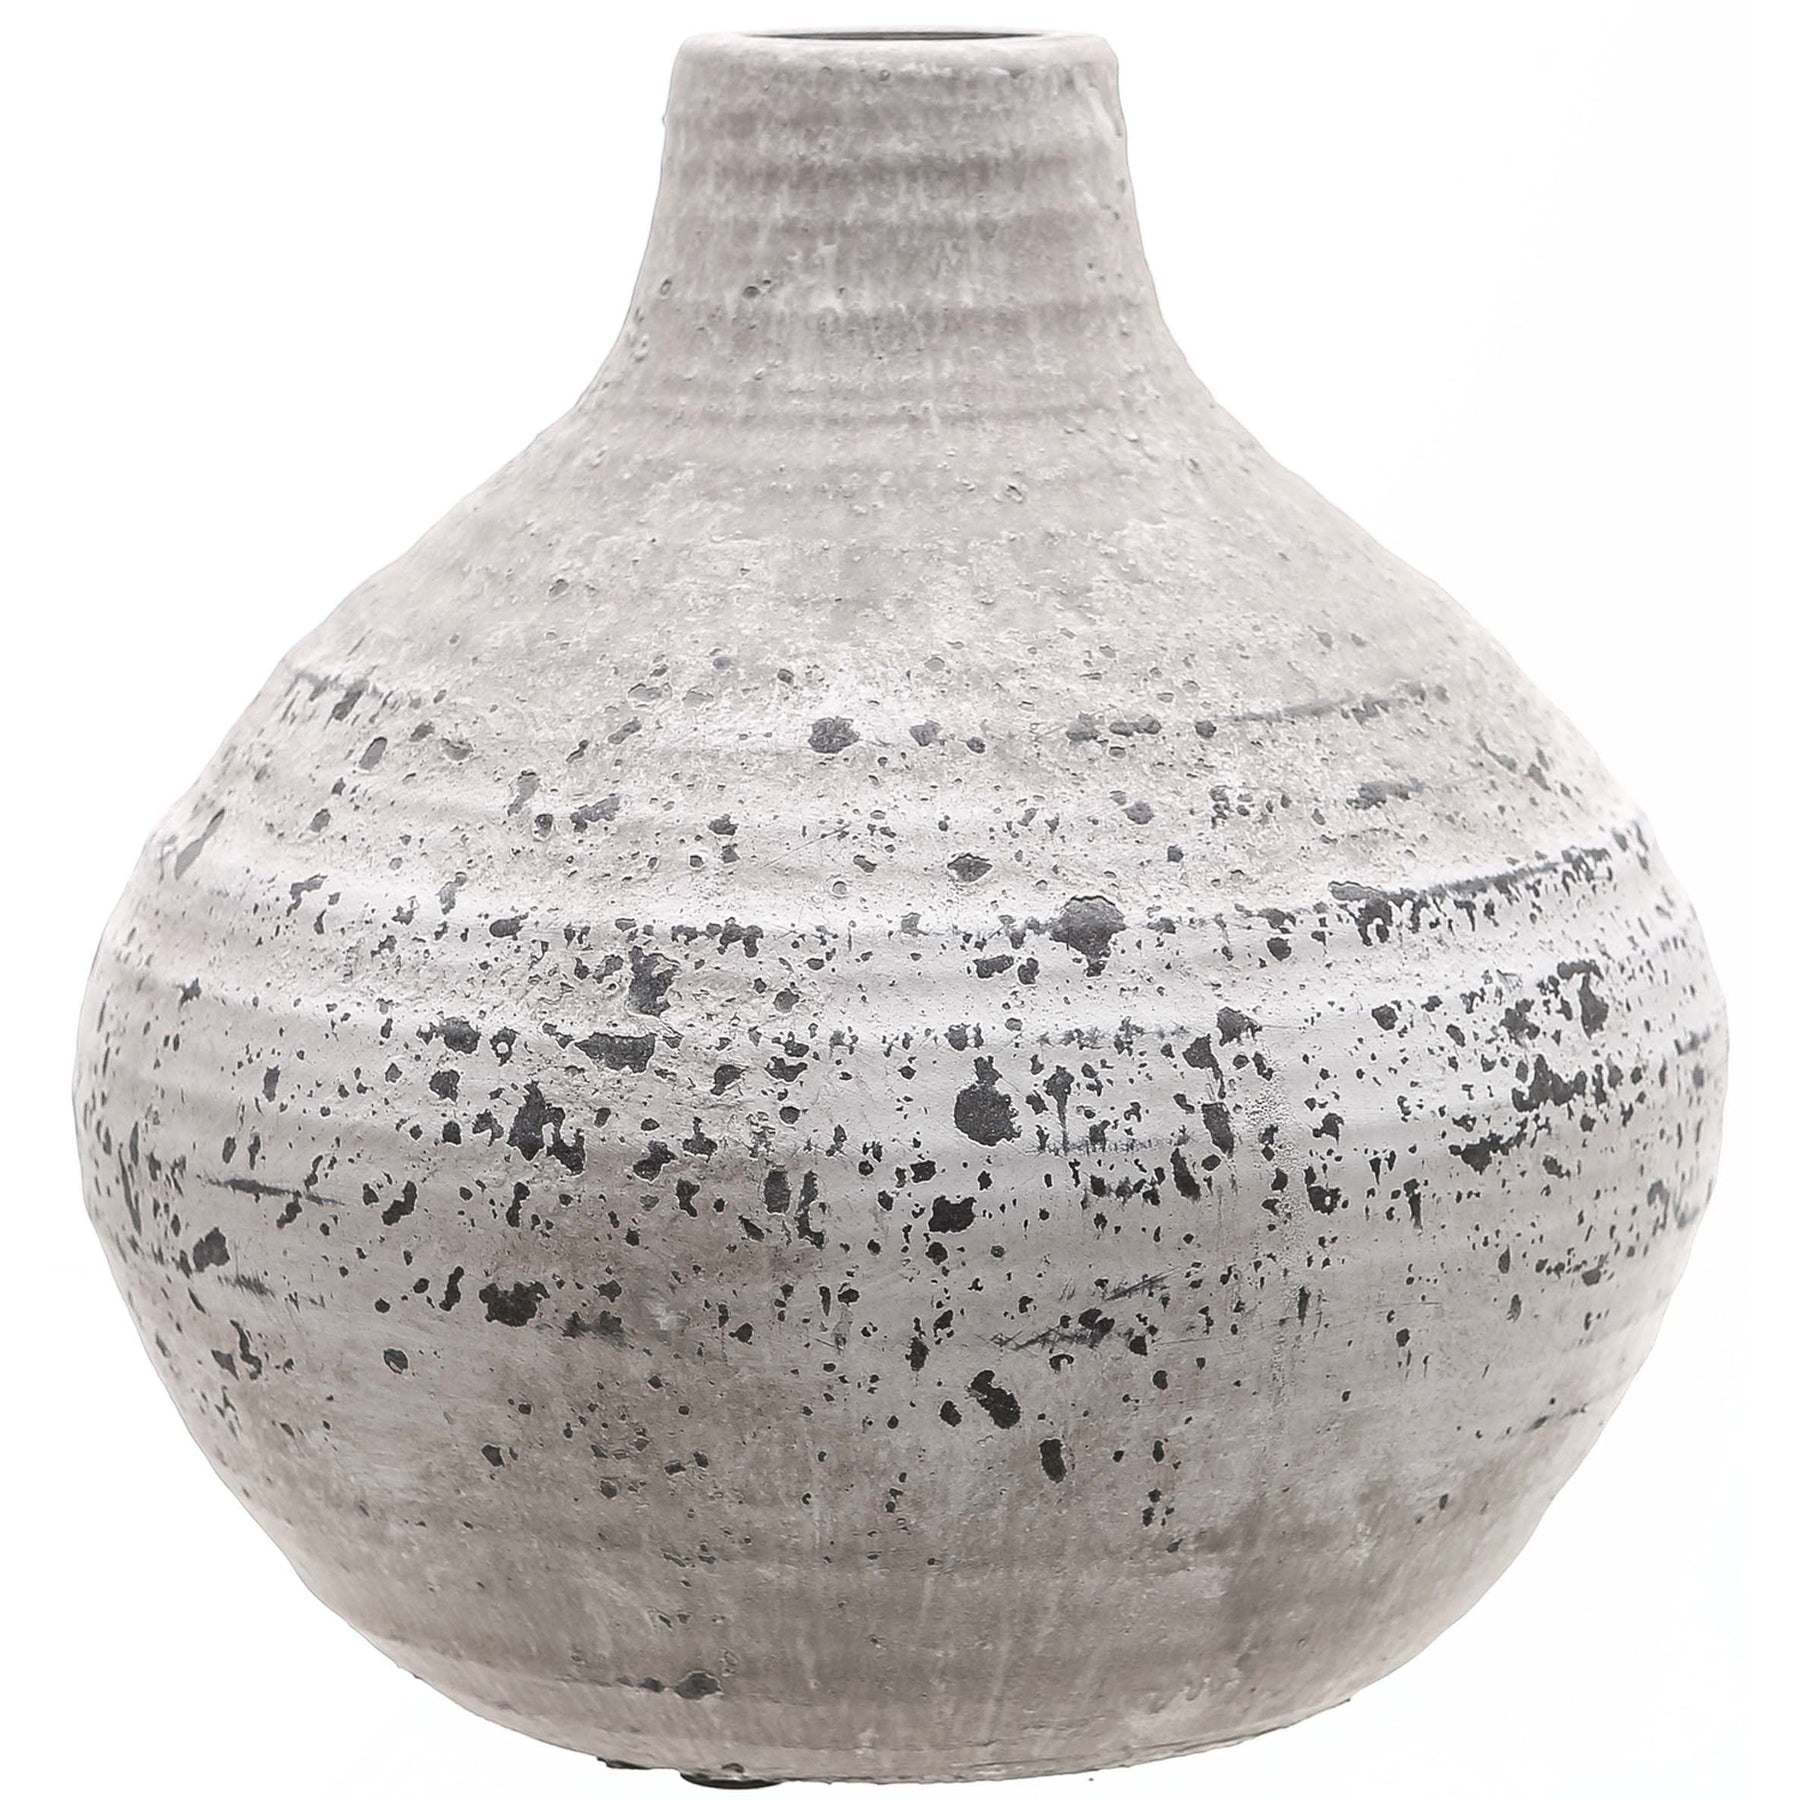 View Amphora Stone Ceramic Vase information